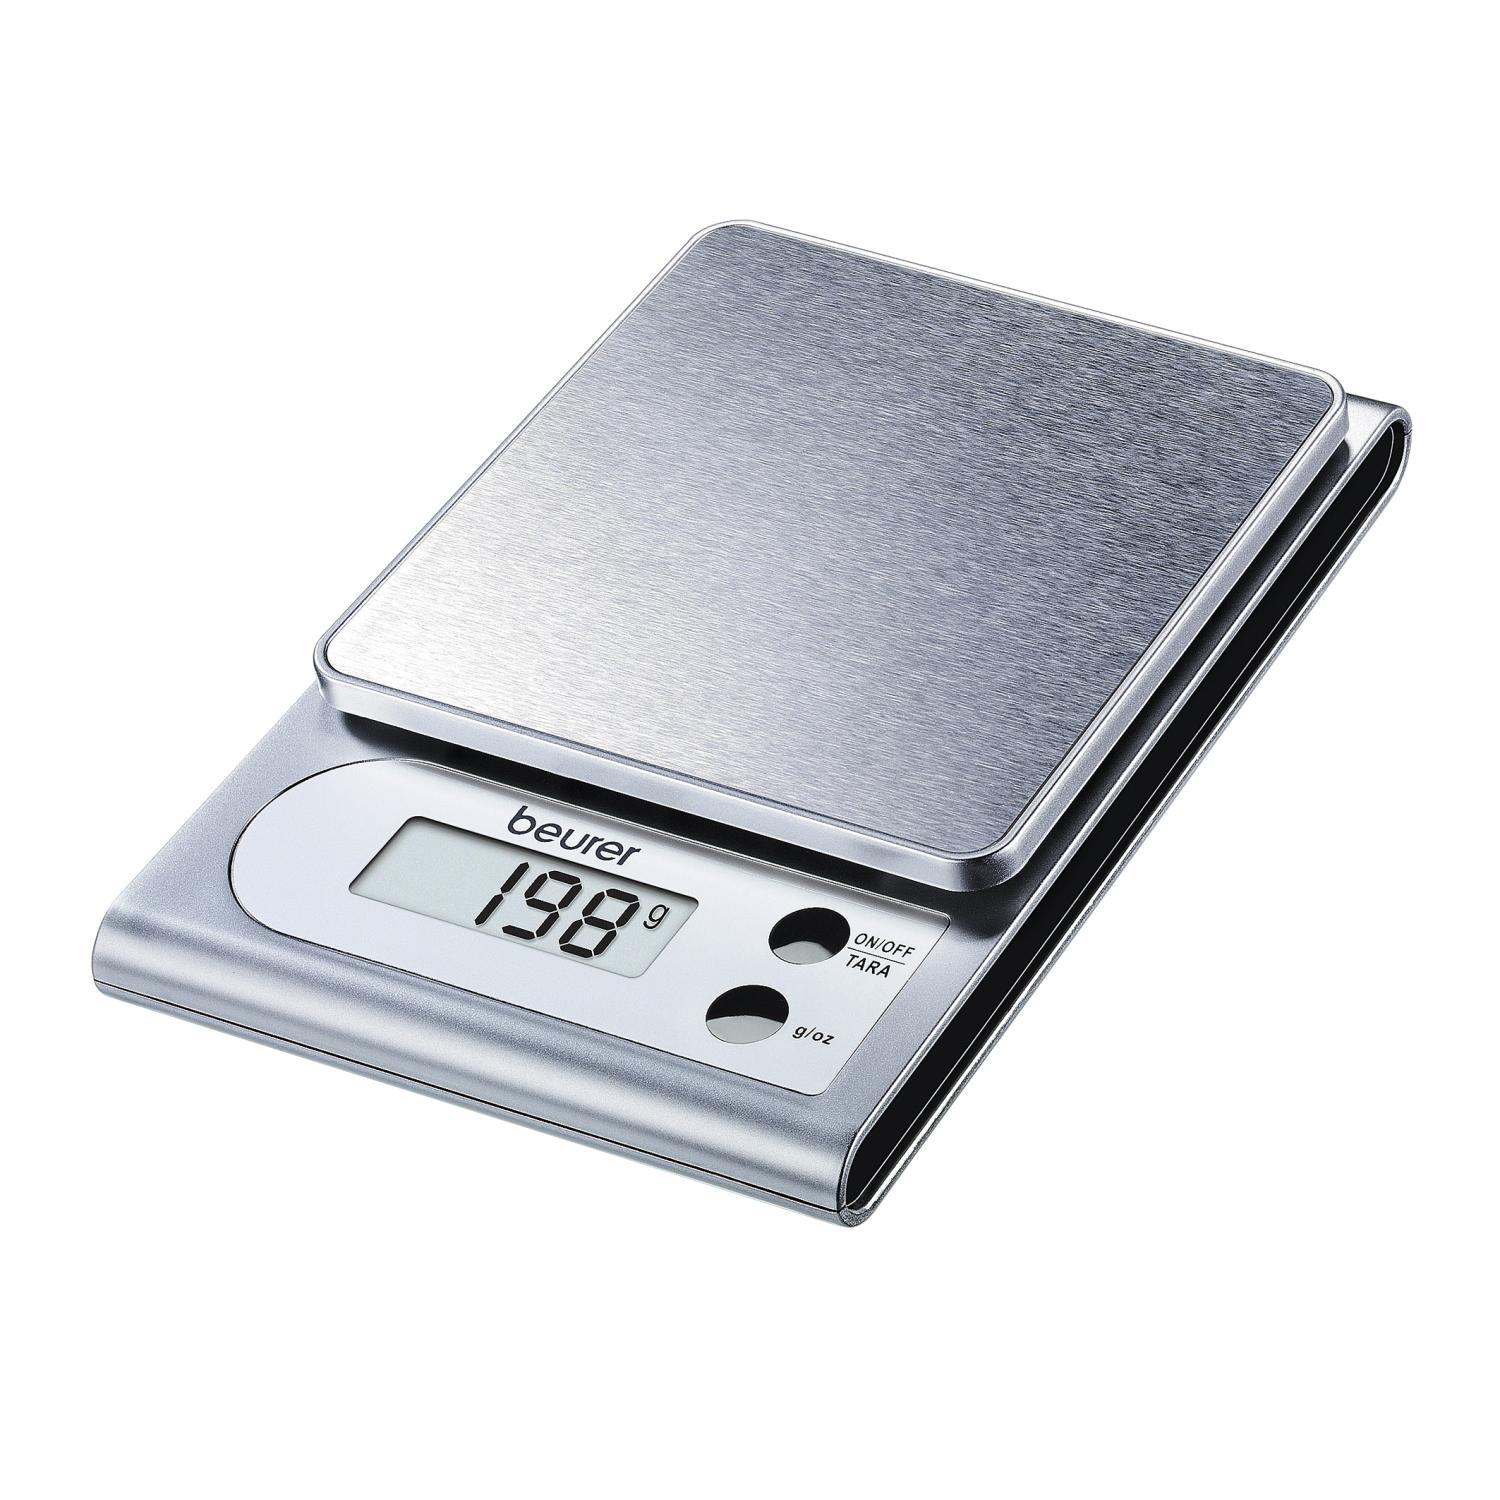 De Cocina Beurer ks22 balanza compacta 22 acero inoxidable peso 3kg escala 1g display digital 704.10